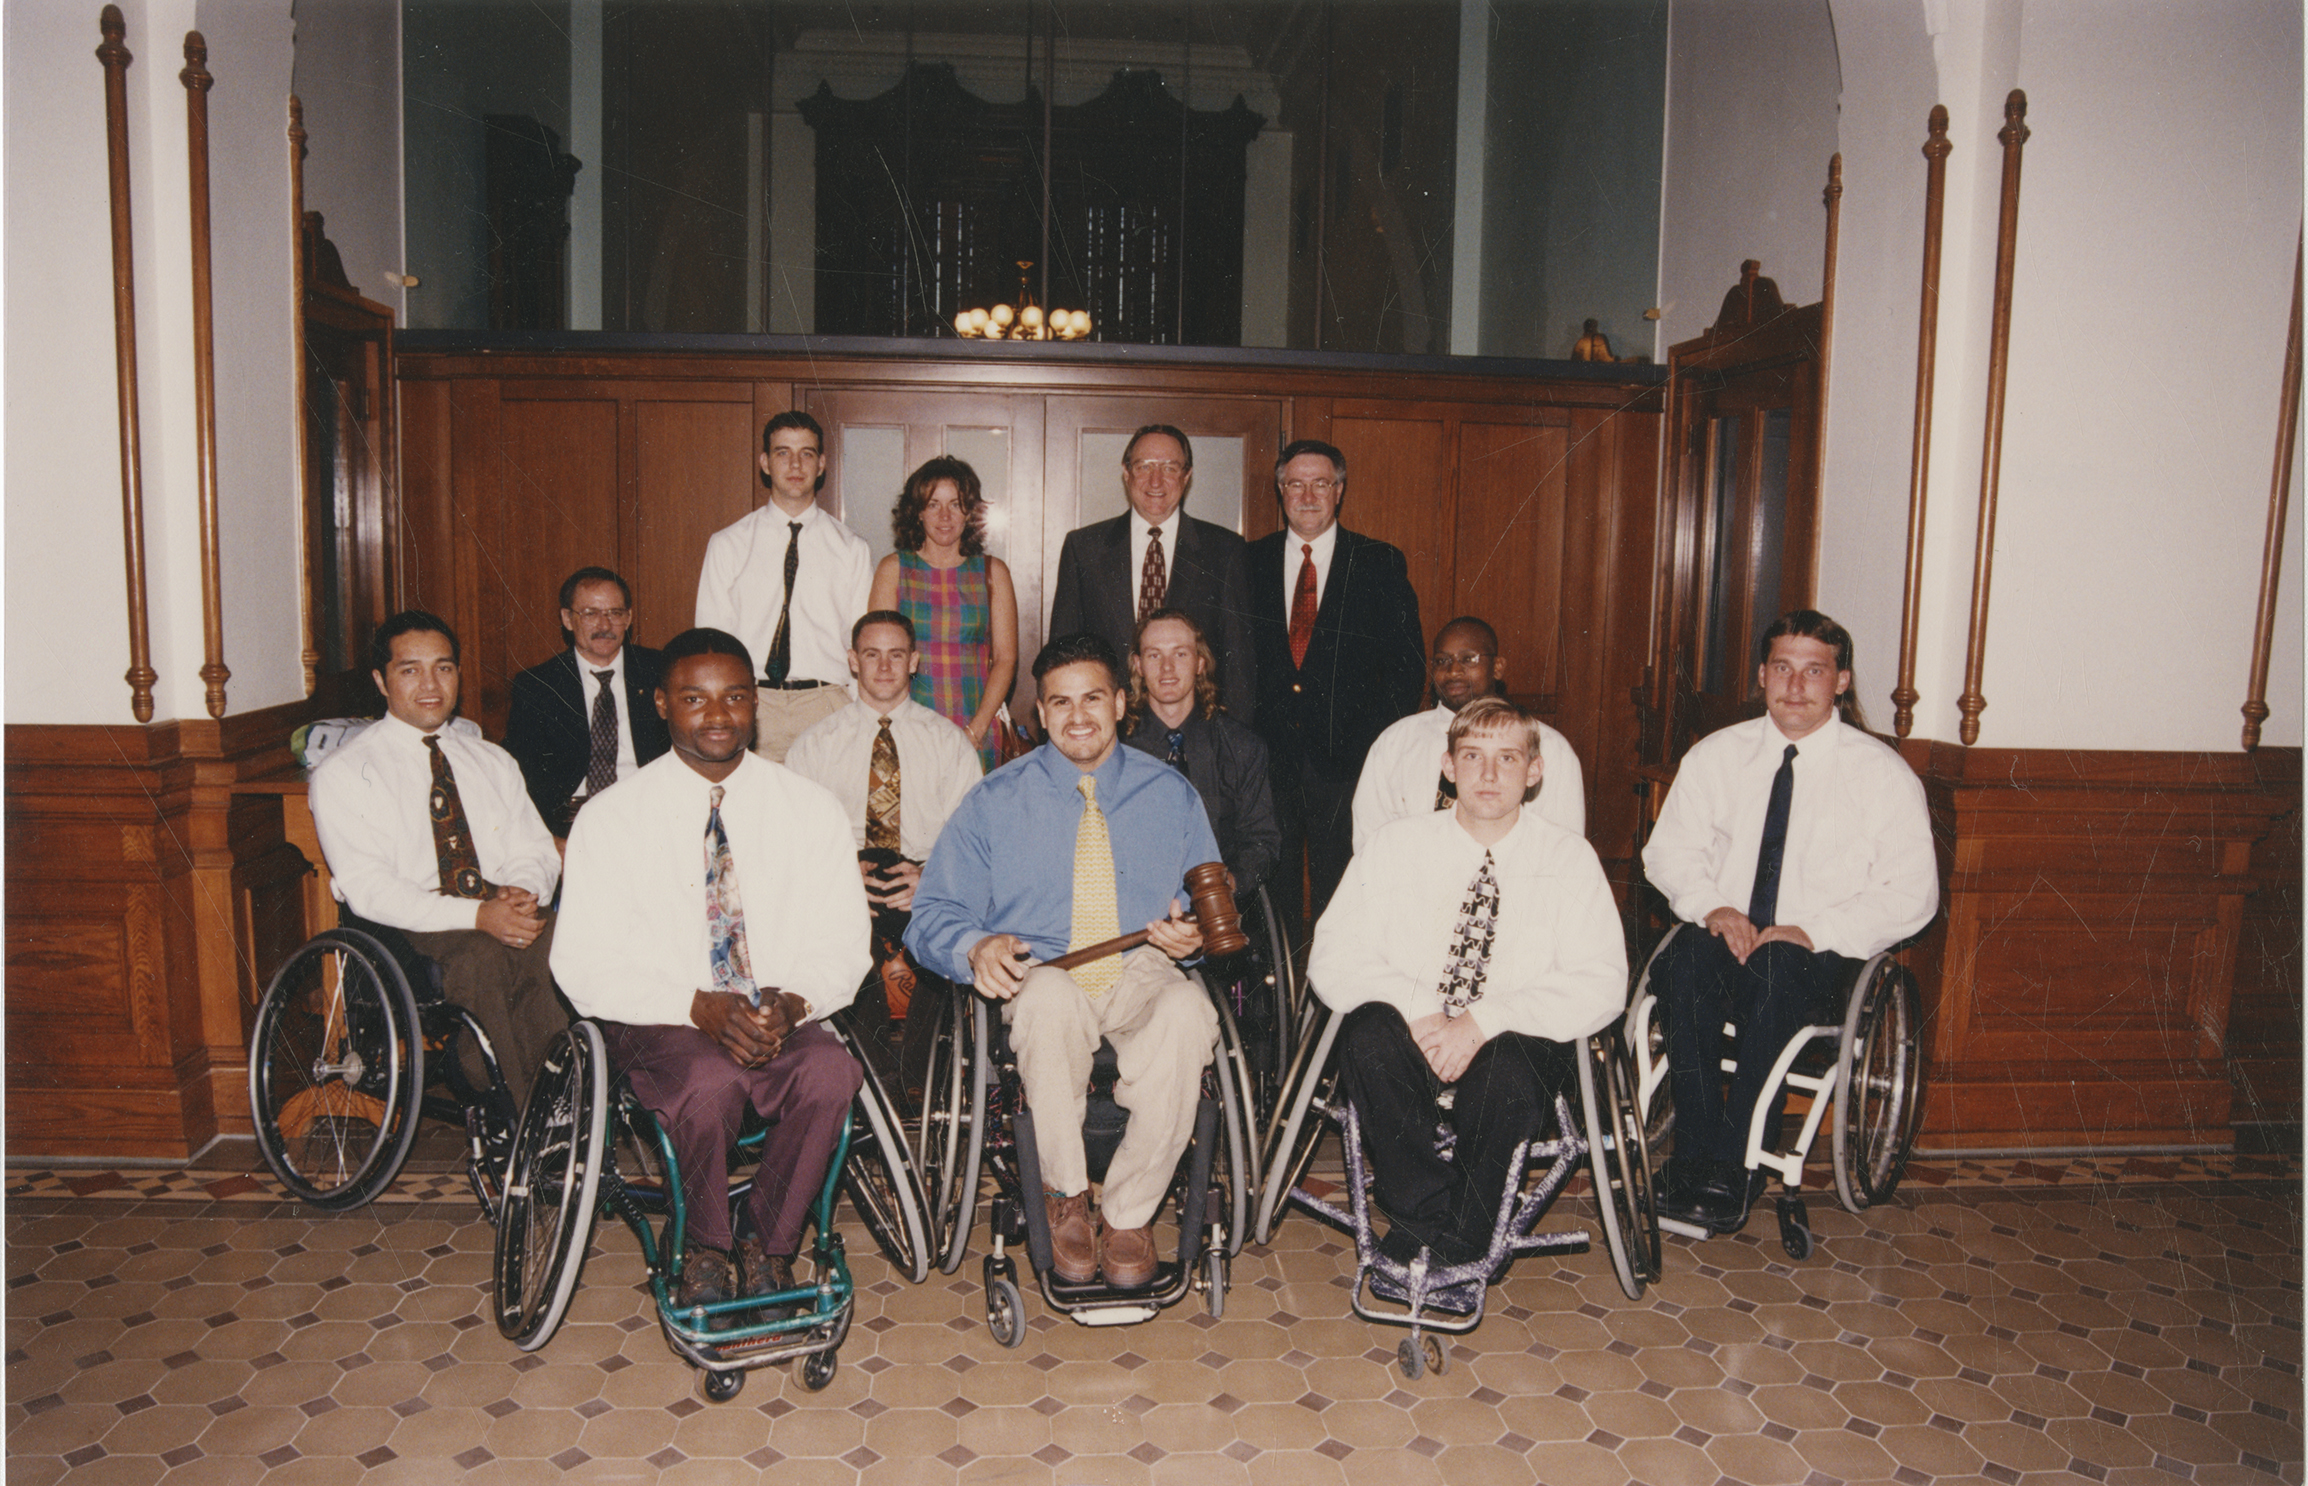 University of Texas at Arlington's Movin' Mavs men's wheelchair basketball team pose for a photograph